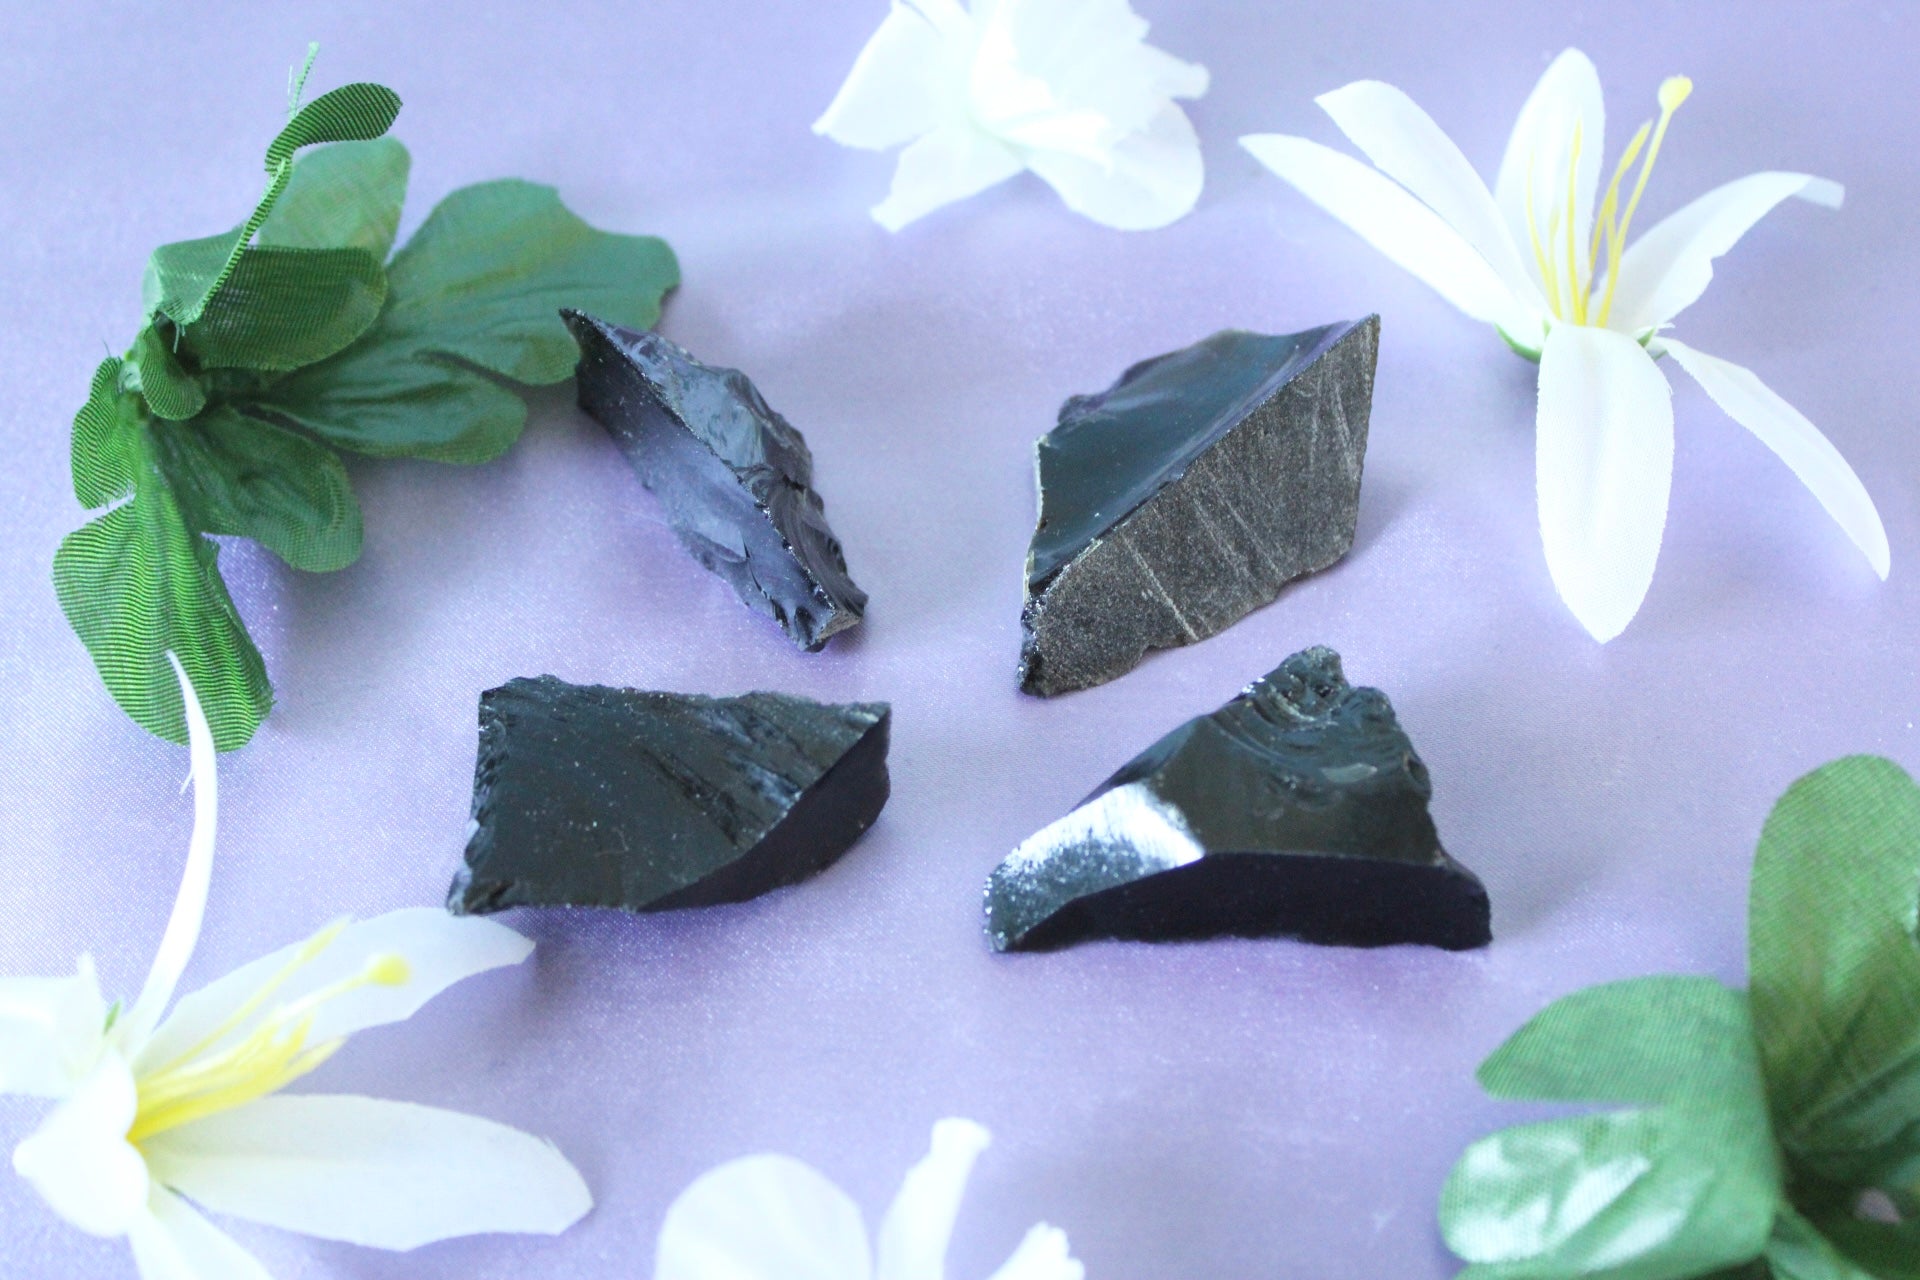 Black Obsidian Raw Stone